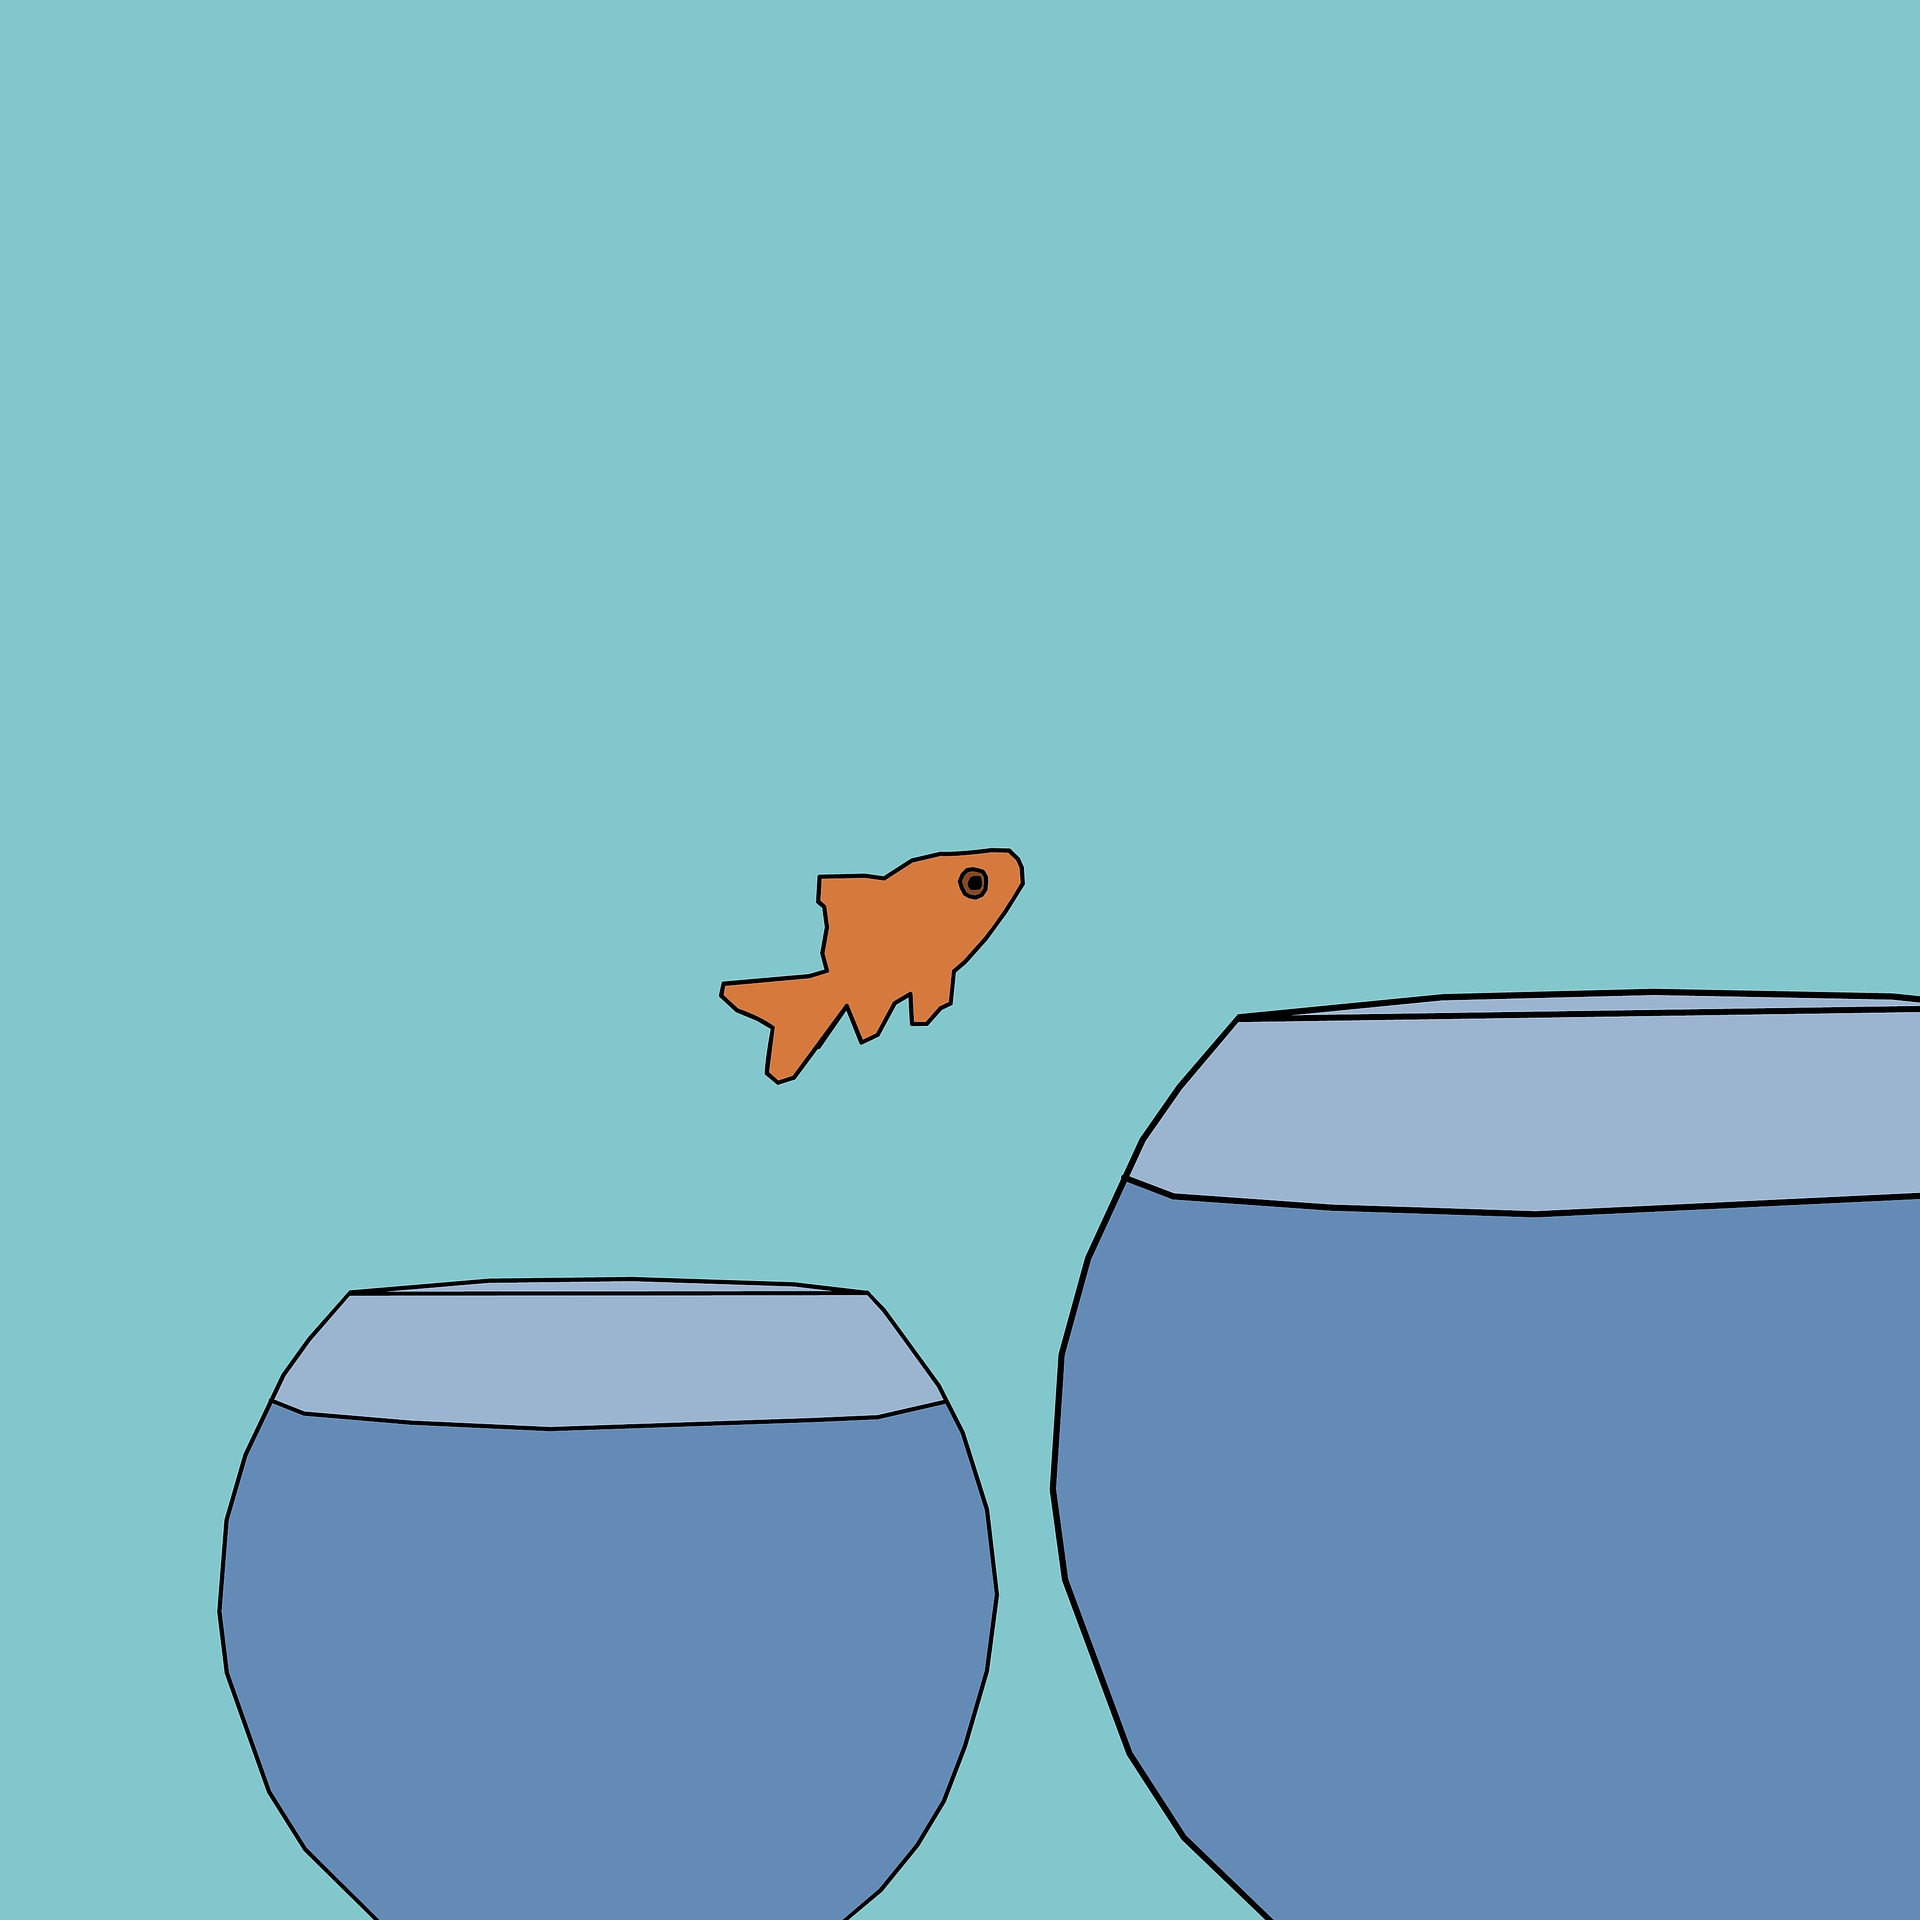 Small goldfish jumping from a small bowl into a bigger bowl